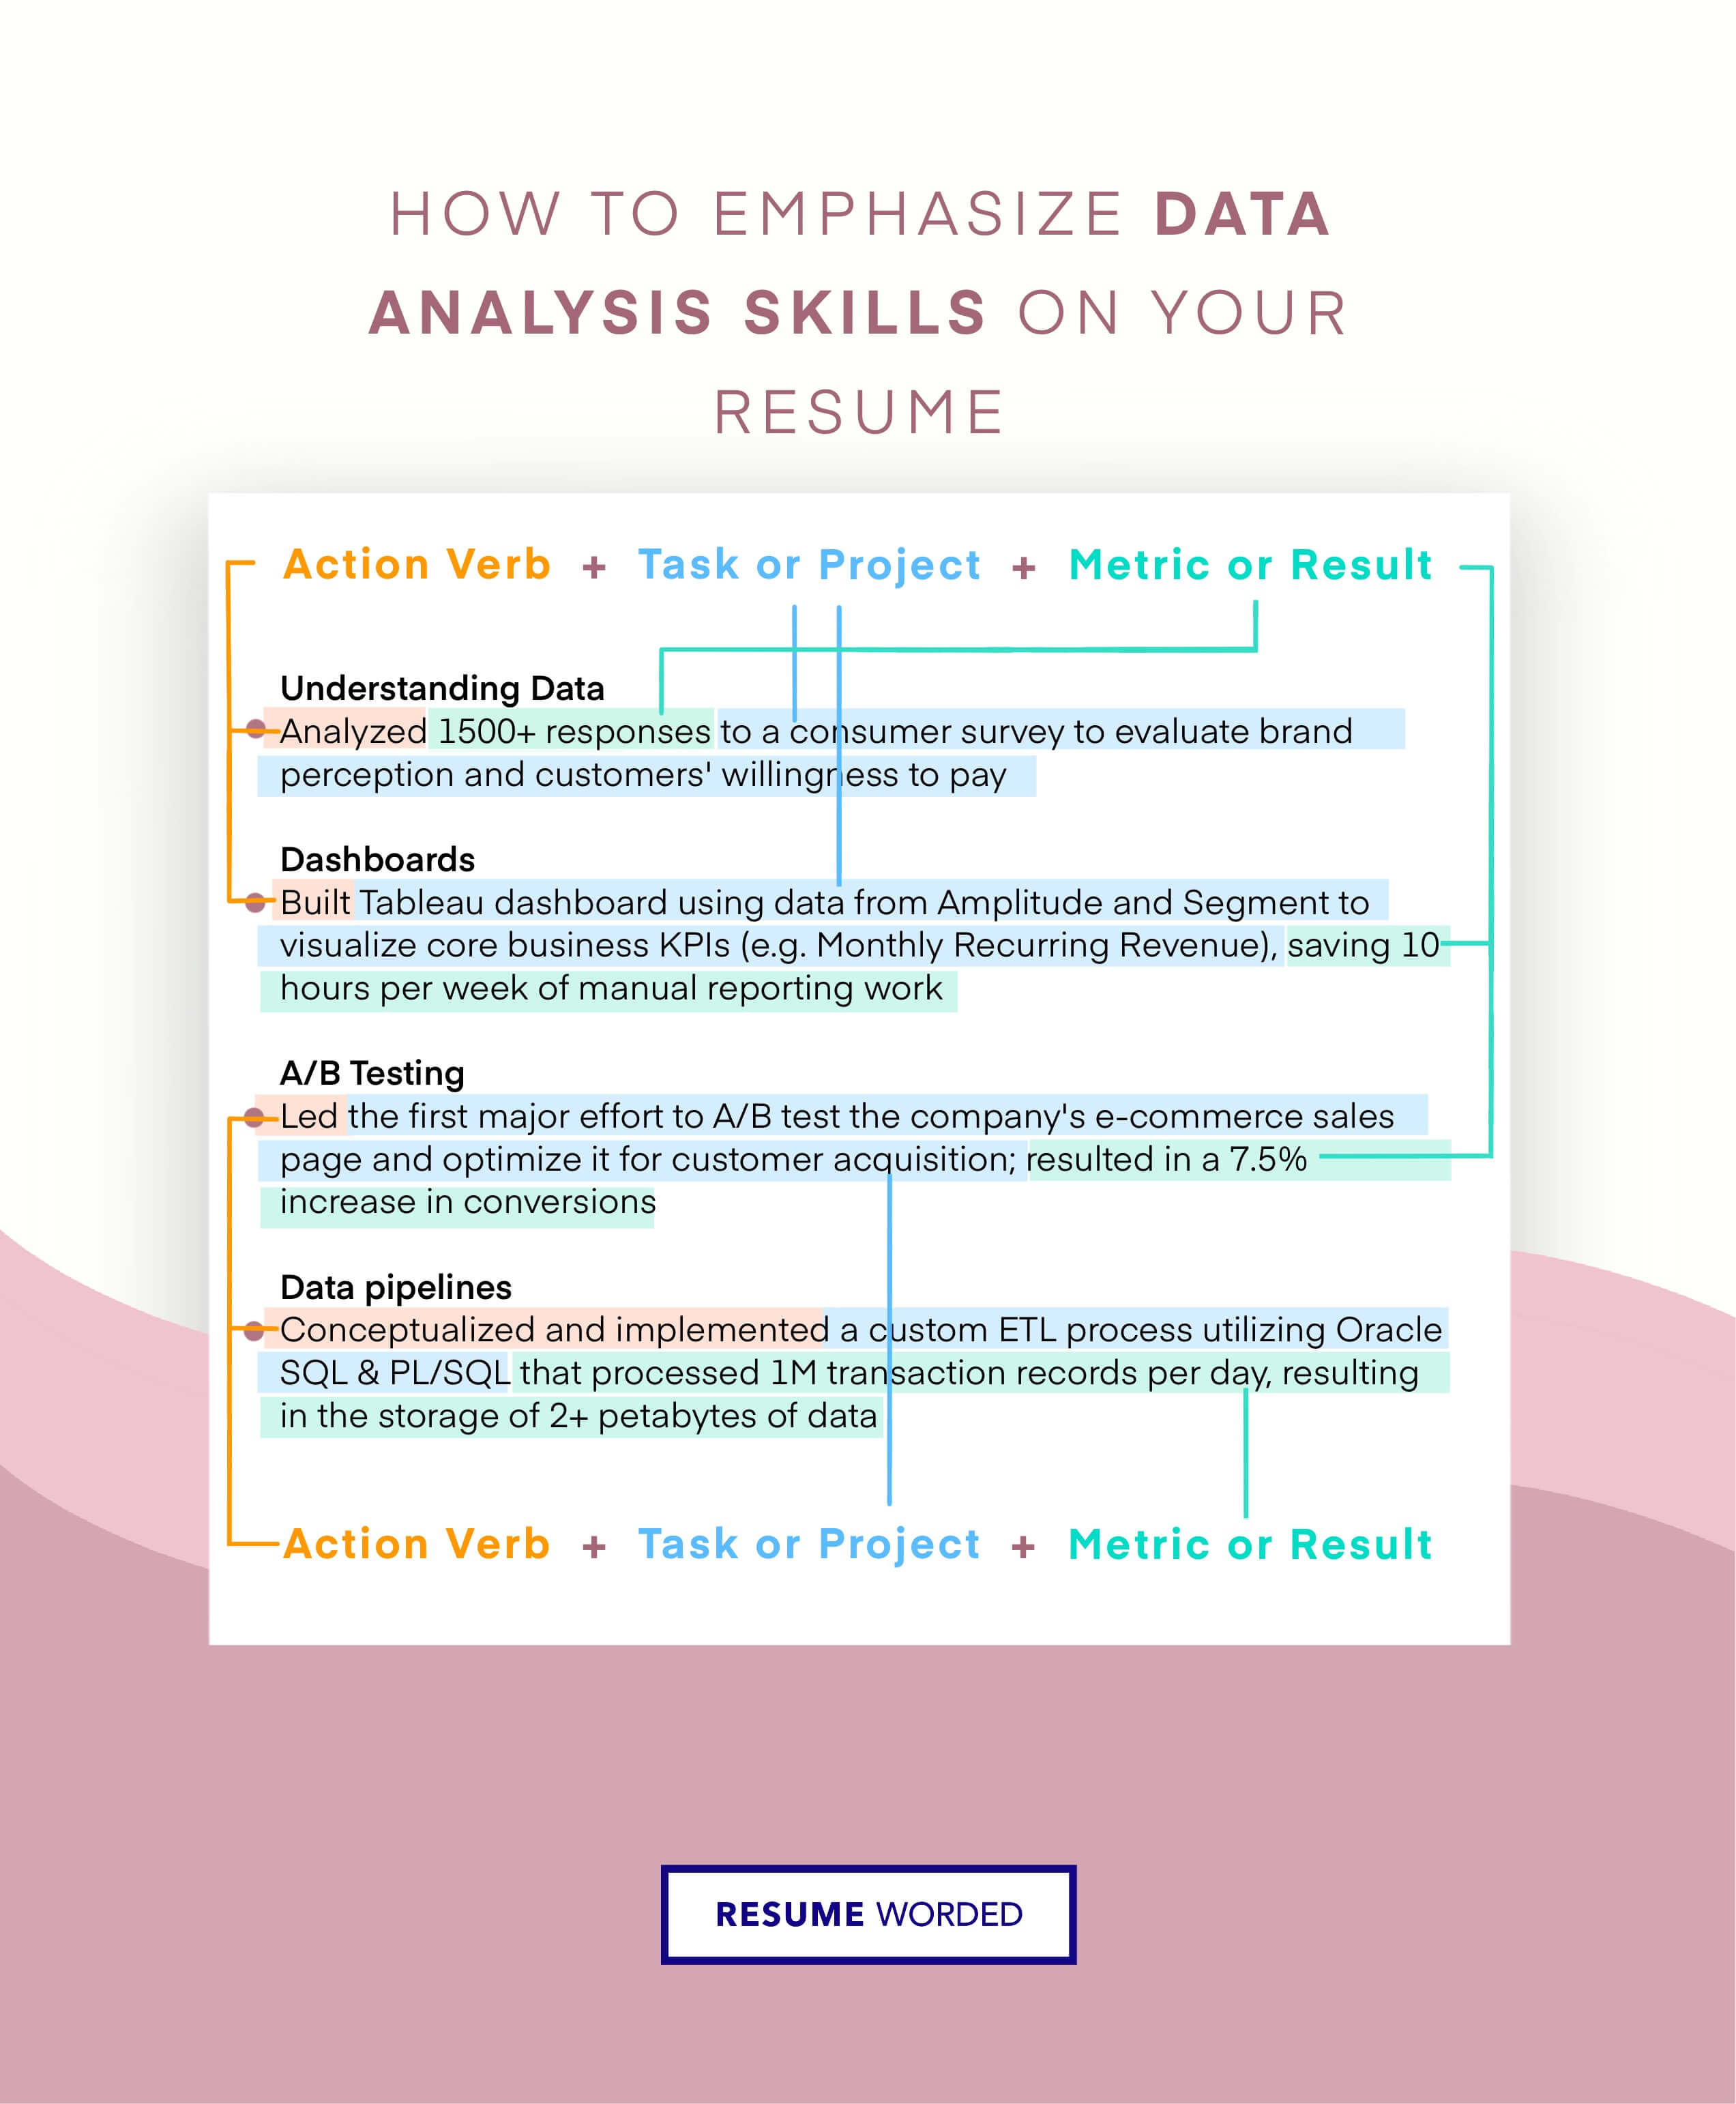 Highlight Data Analysis Skills - Entry Level/Junior Financial Analyst Resume